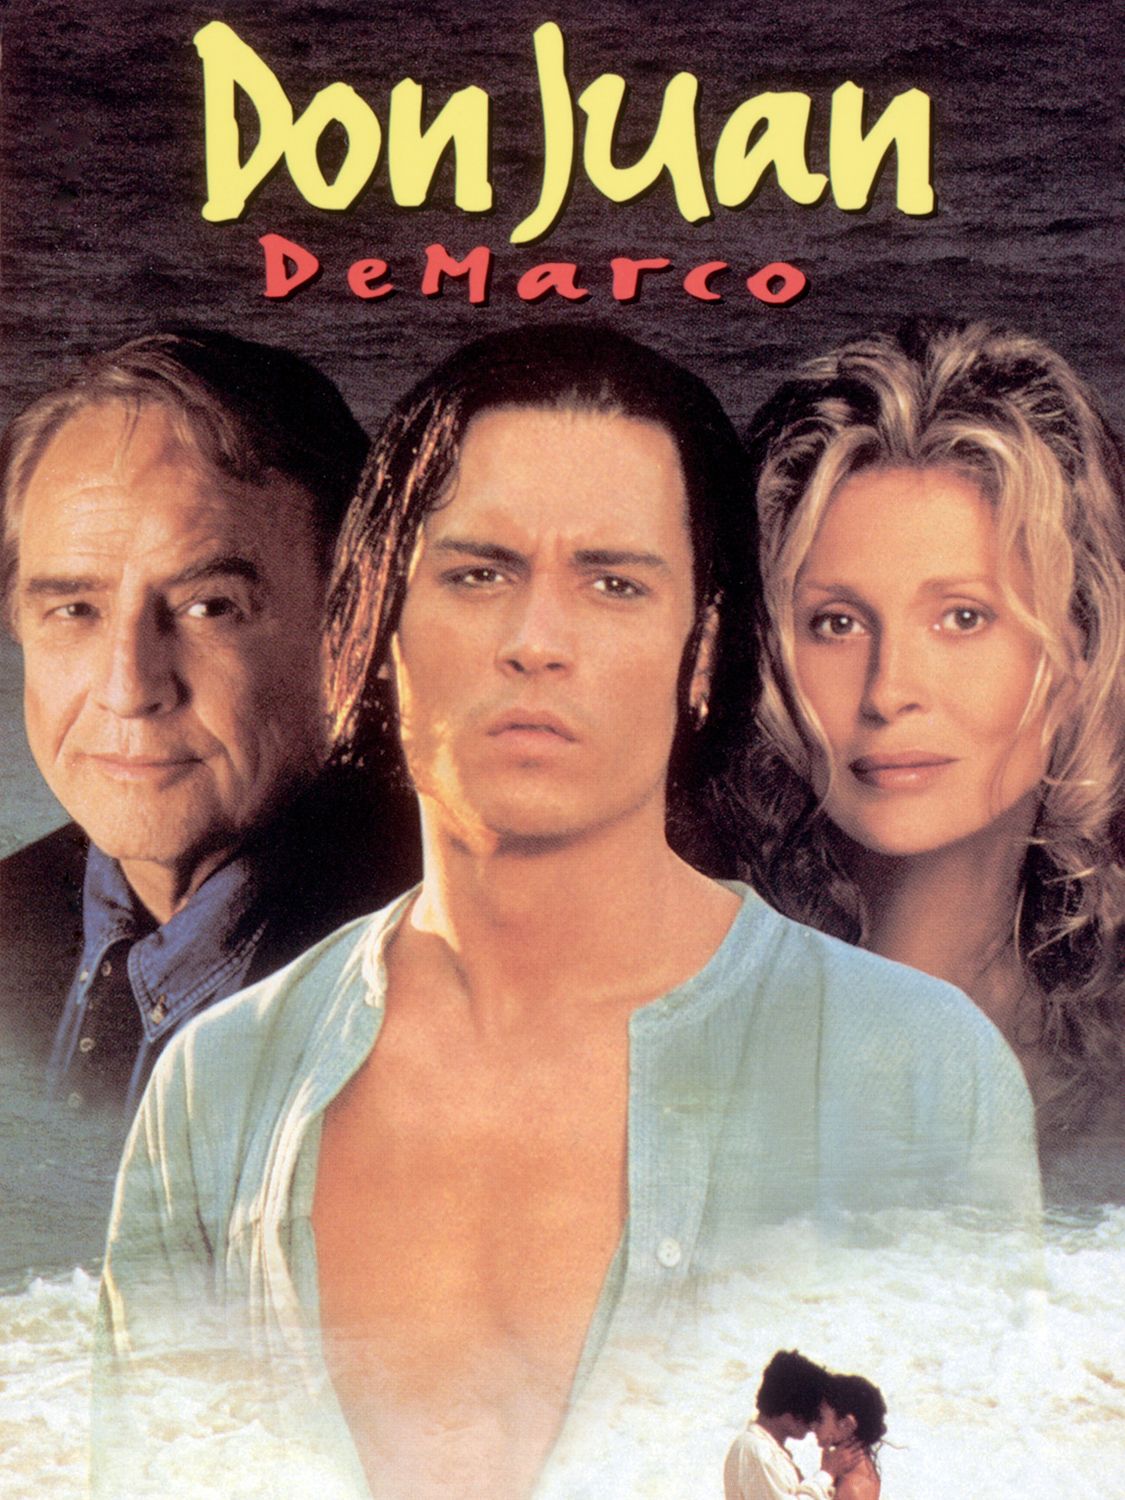 Don Juan DeMarco (1995) Main Poster